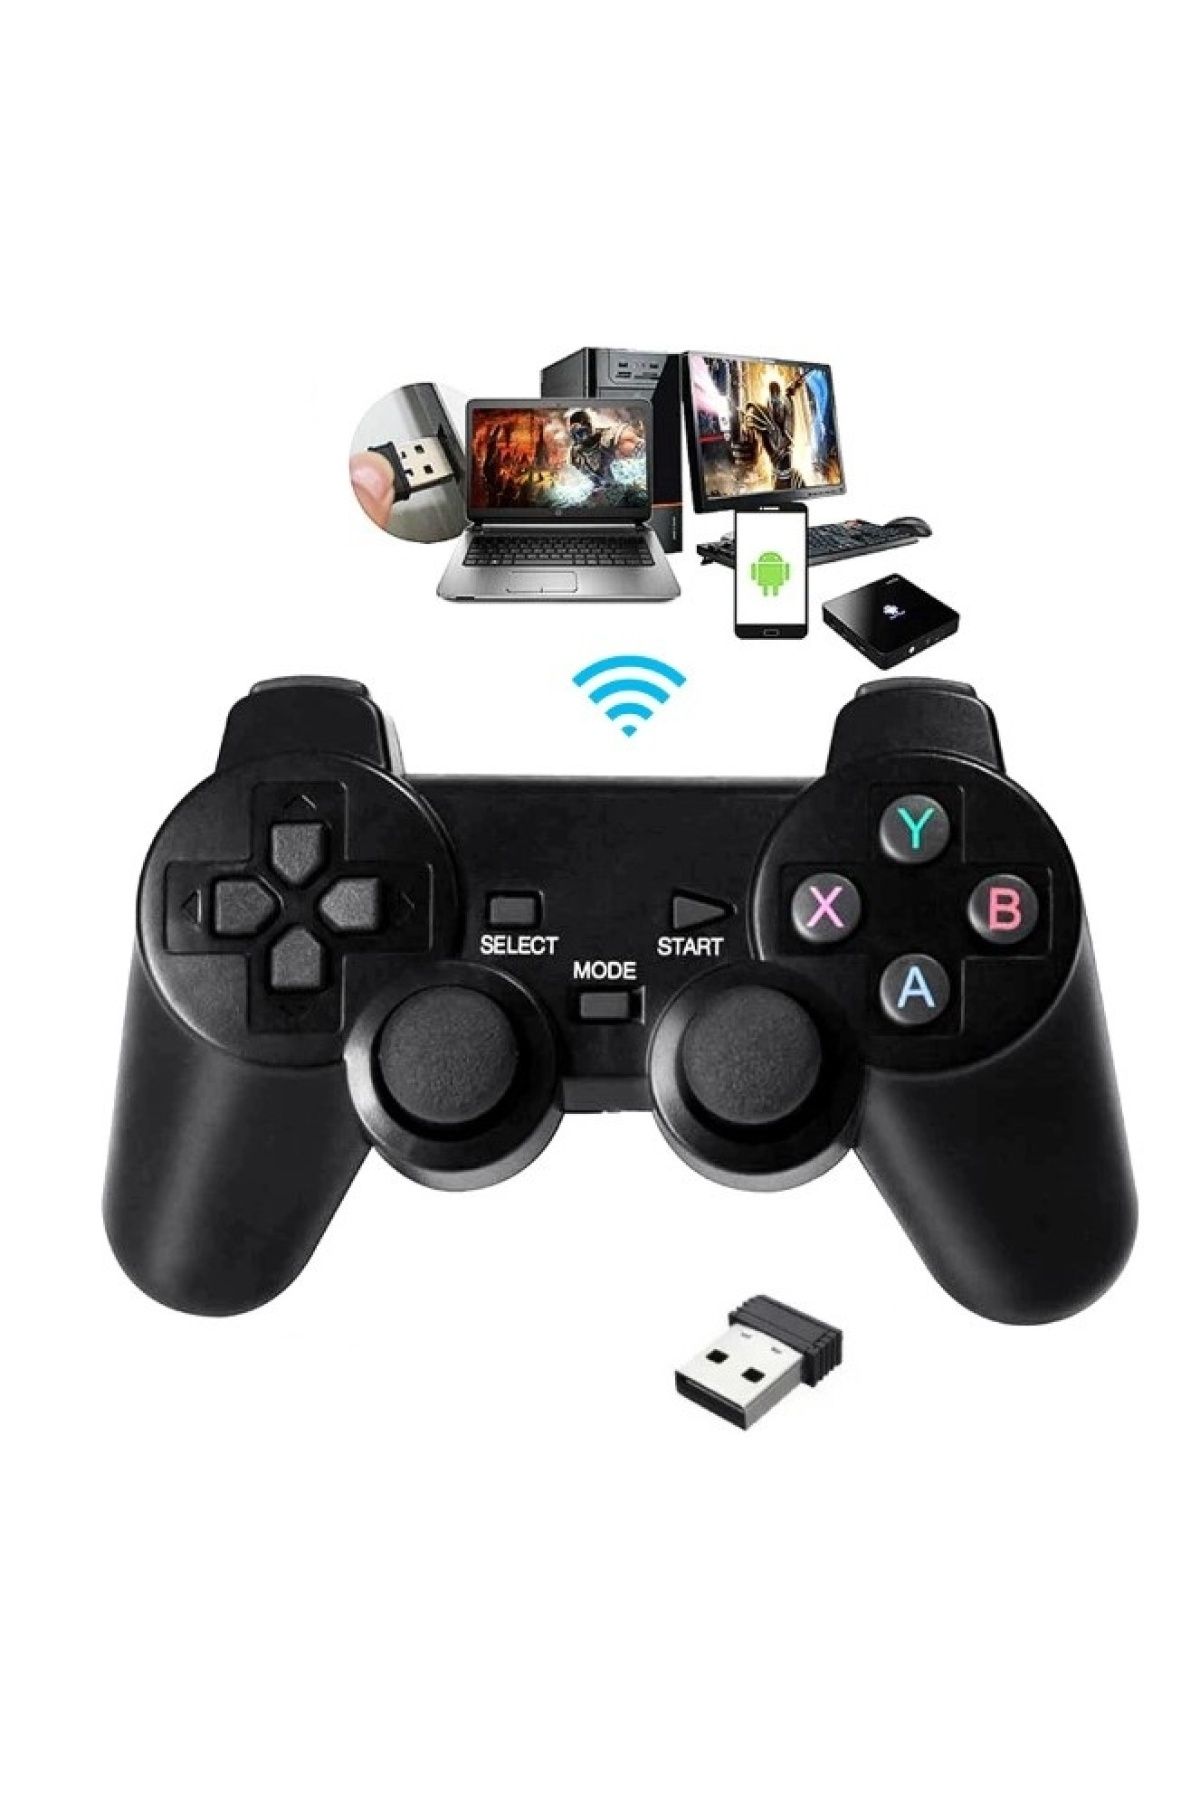 jetucuzal Concord 6IN1 2.4G WiFii Kablosuz Android TV / PC Uyumlu Titreşimli USB Joystick Oyun Kolu Gamepad